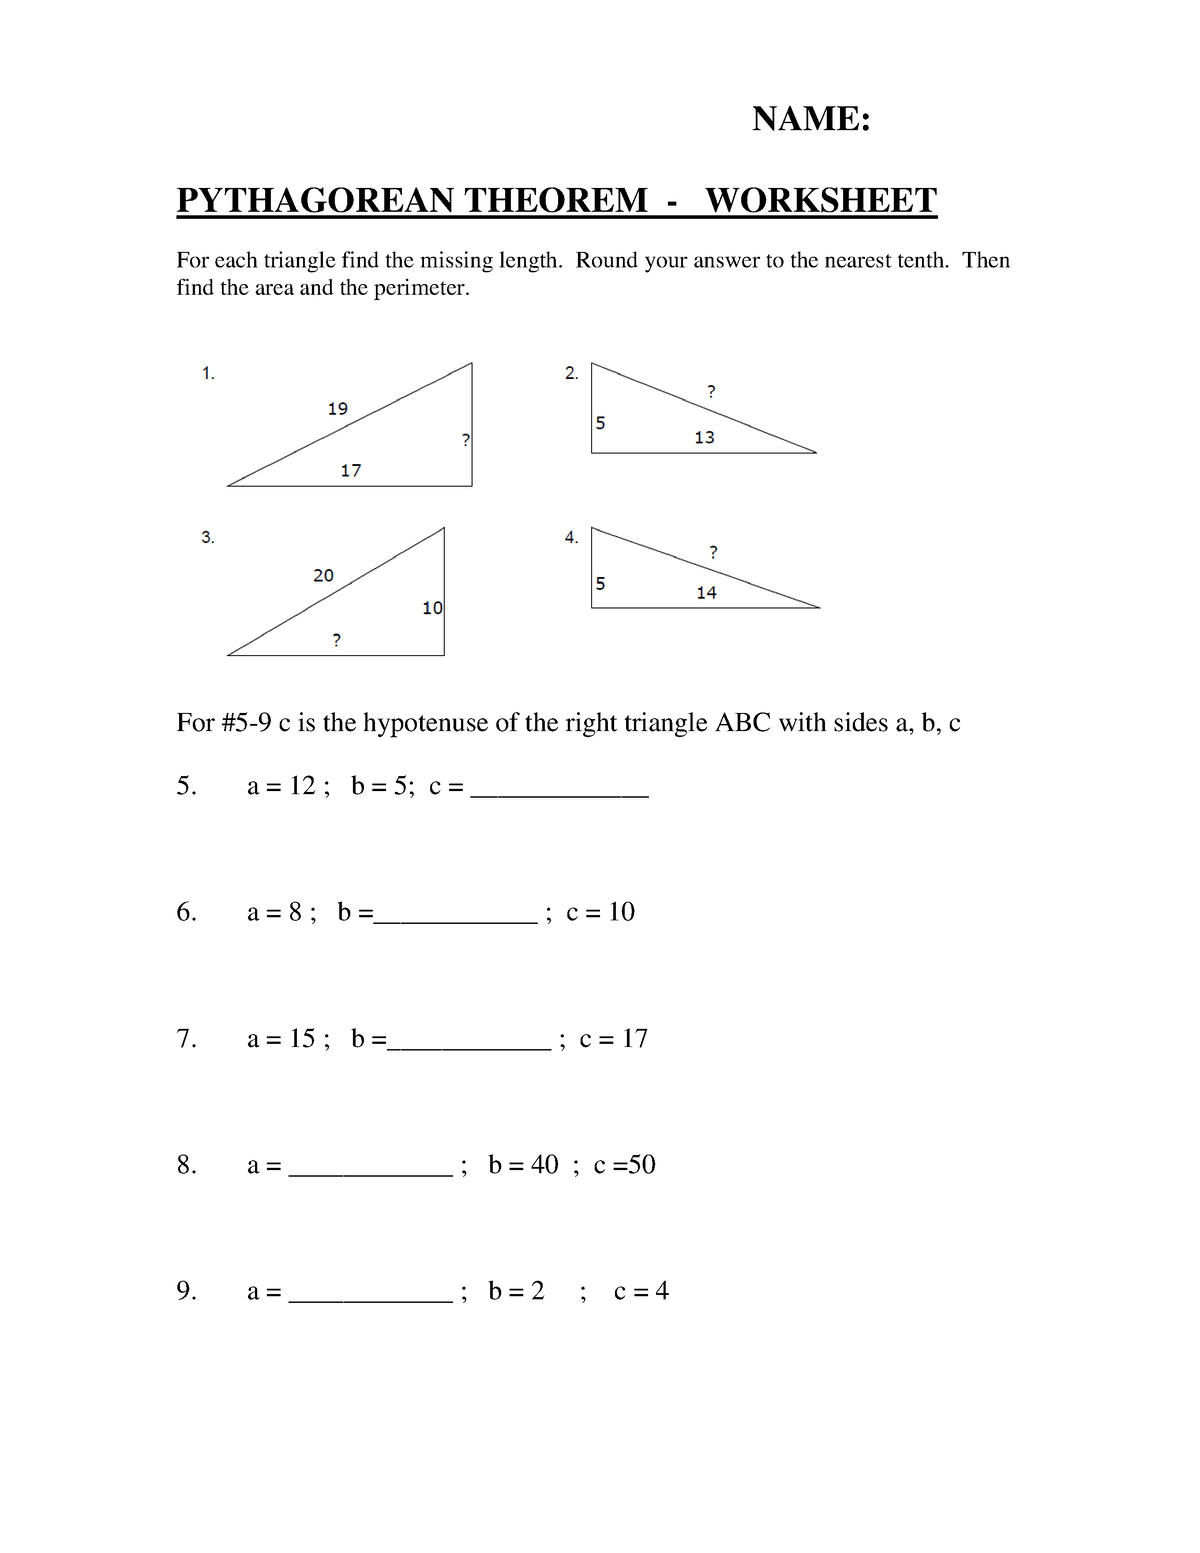 Pythagorean Theorem Test - NAME: PYTHAGOREAN THEOREM - WORKSHEET With Pythagorean Theorem Worksheet With Answers